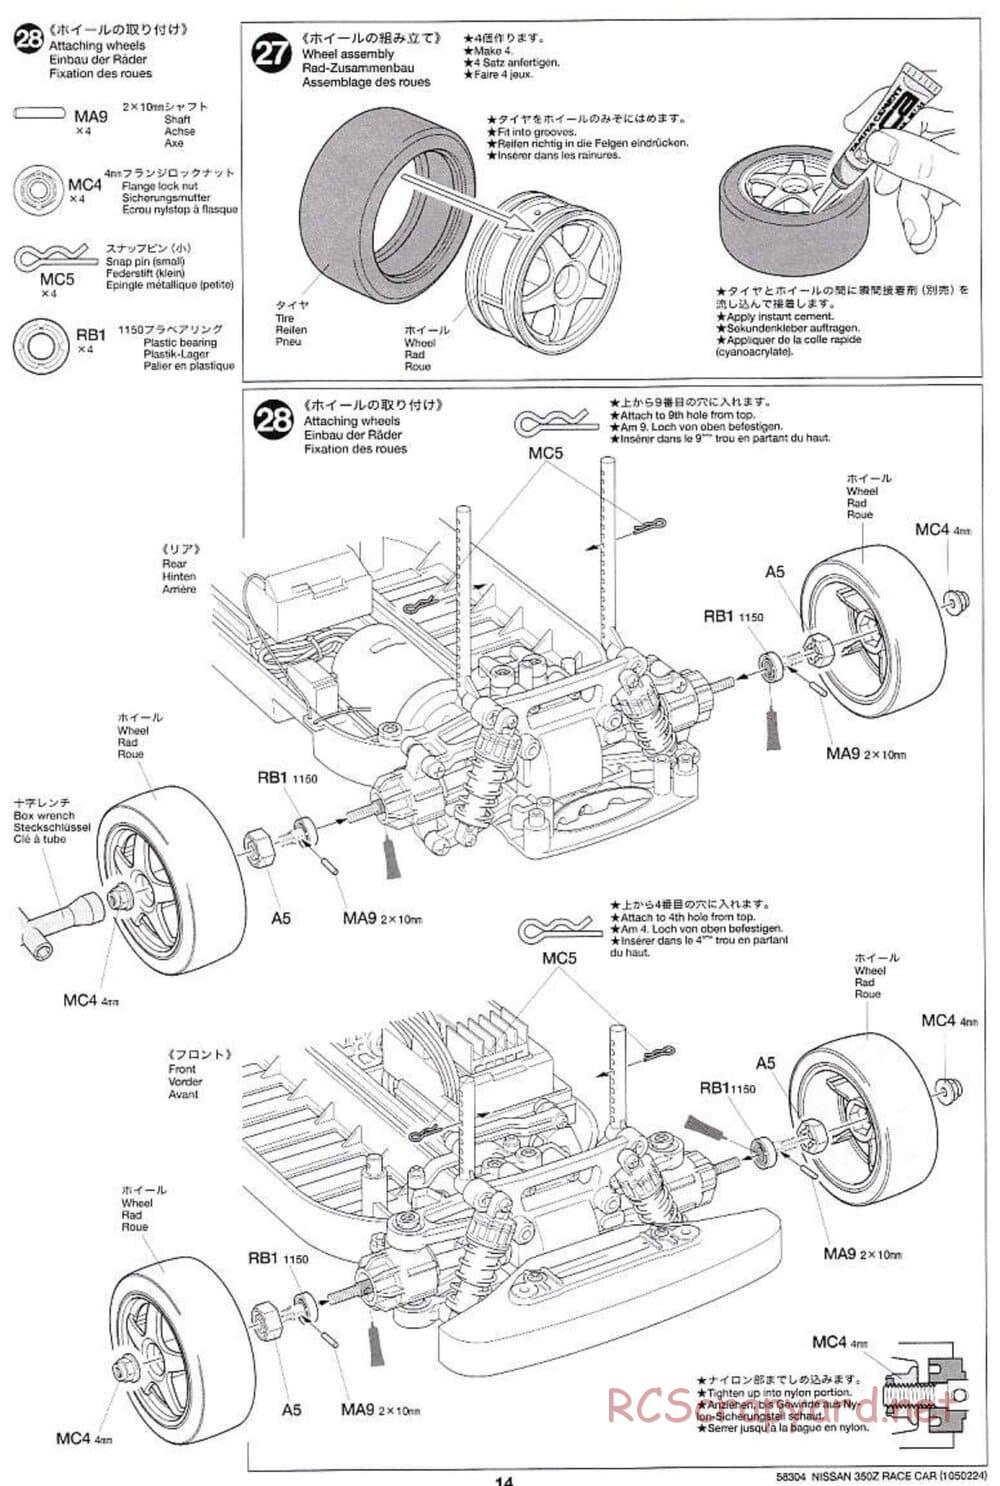 Tamiya - Nissan 350Z Race-Car - TT-01 Chassis - Manual - Page 14